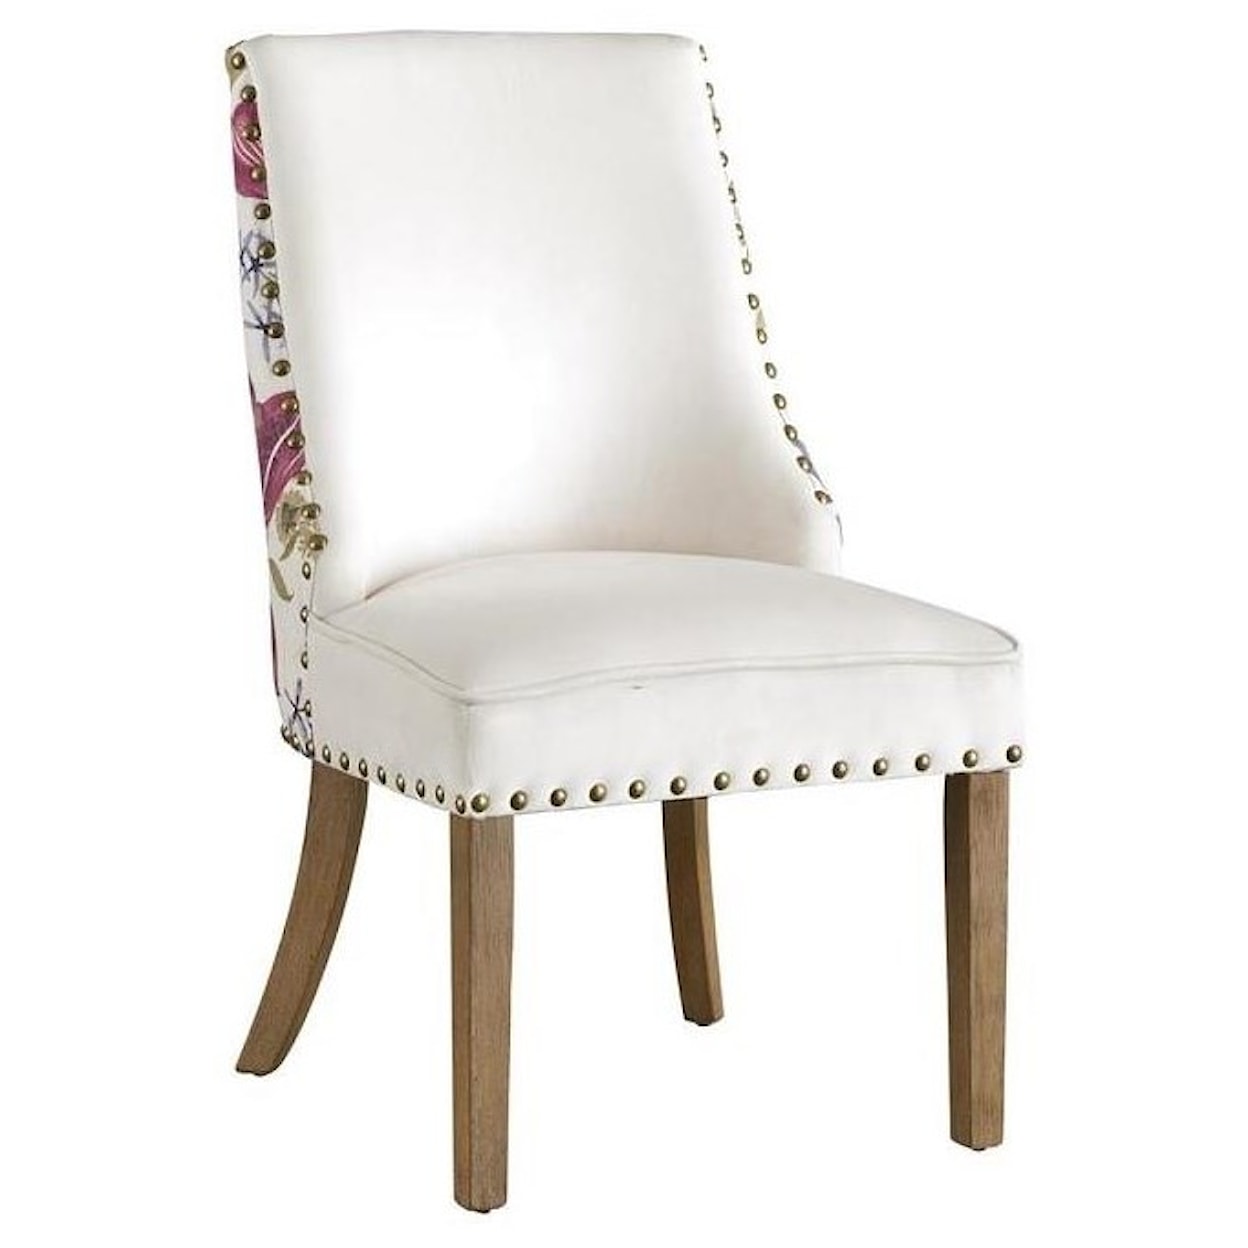 Coast2Coast Home Morris Home Magnolia Upholstered Chair